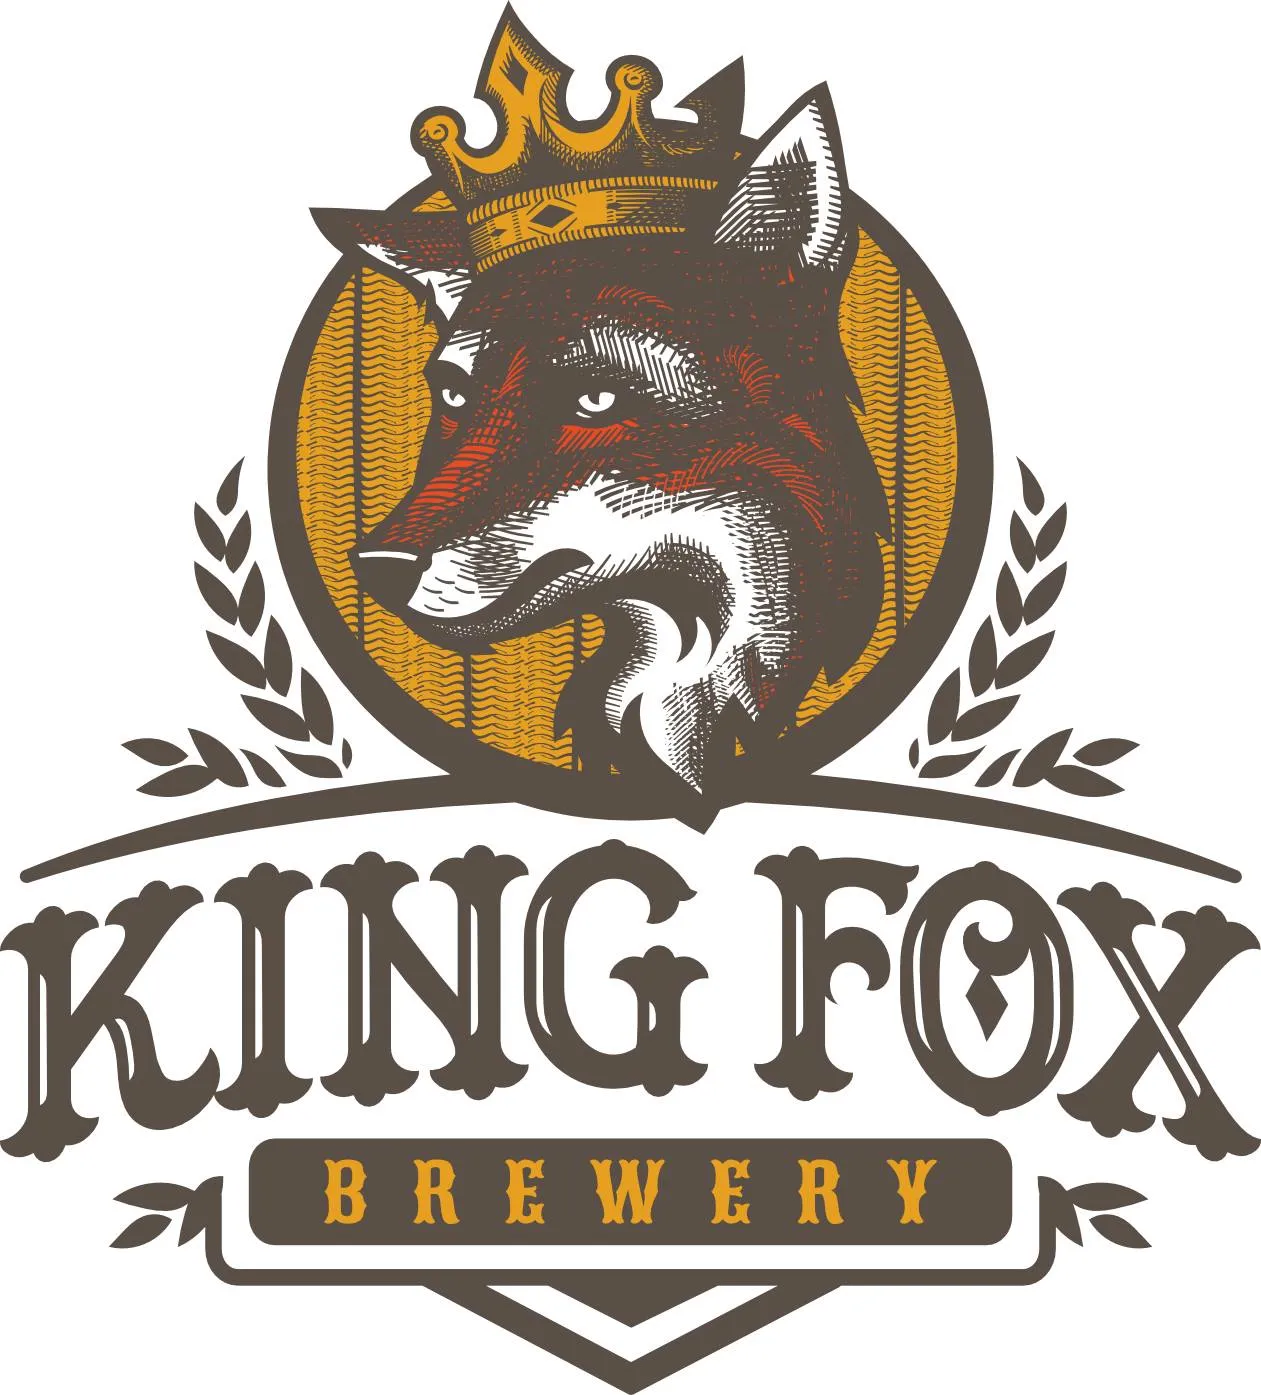 King Fox Brewery